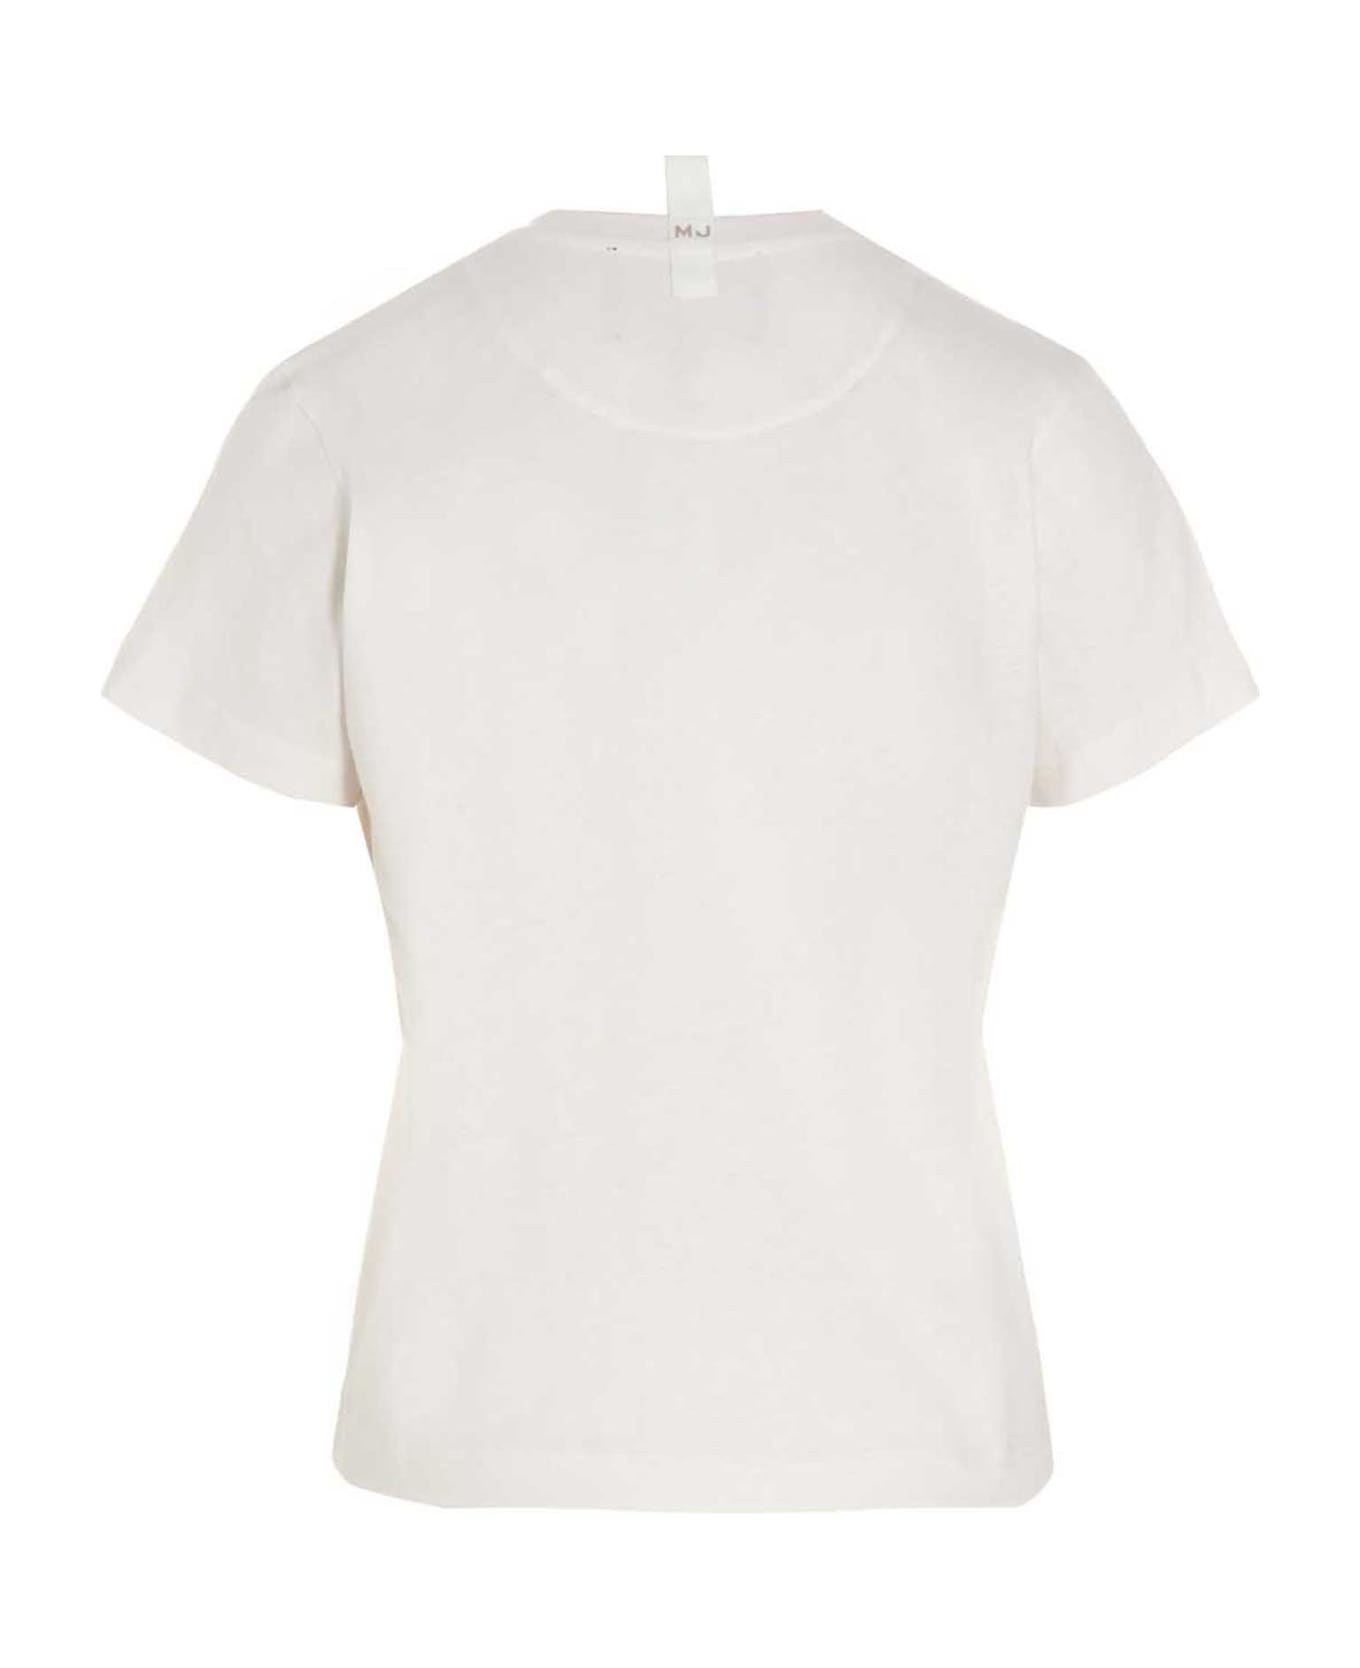 Marc Jacobs Logo Print T-shirt - White